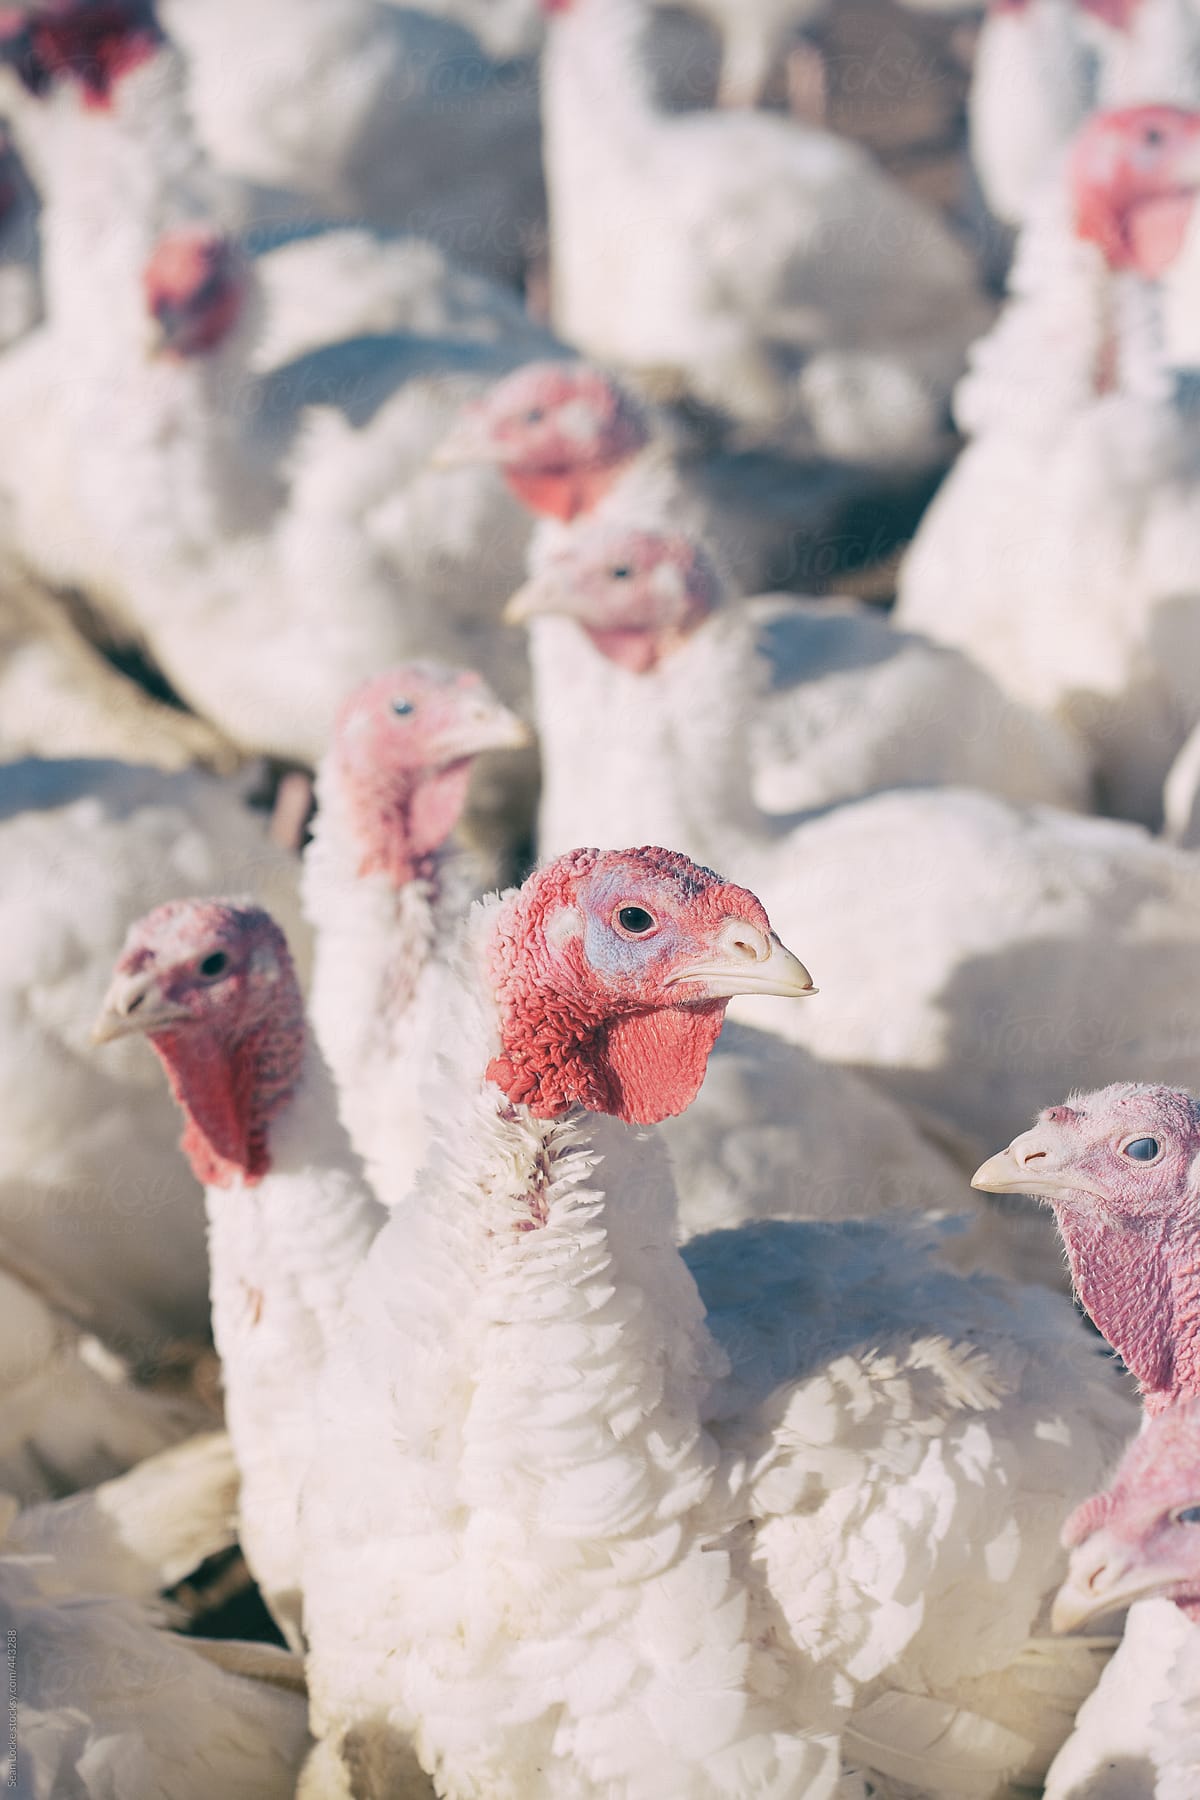 Farm: All Turkeys Look The Same In A Crowd